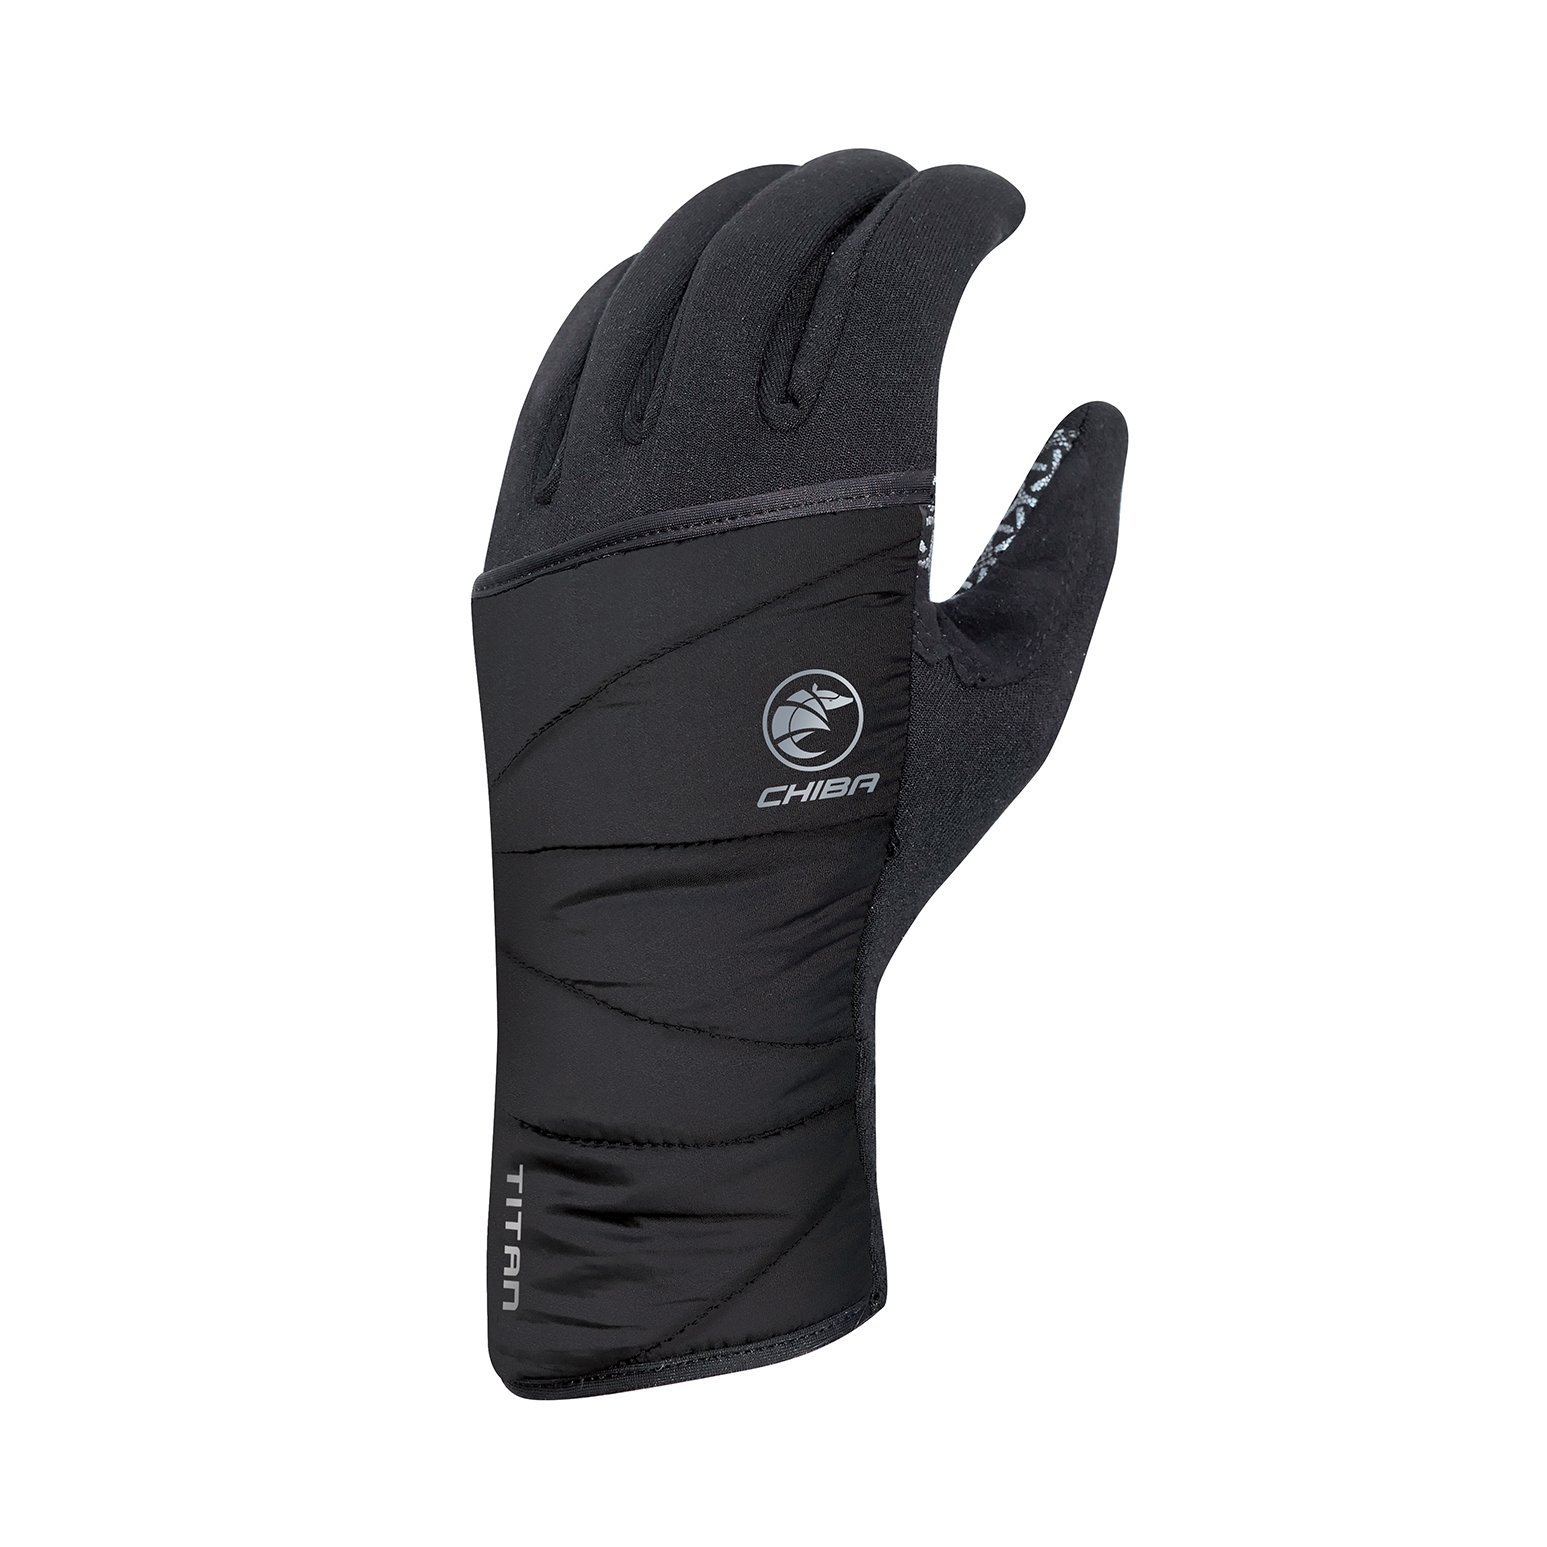 Image of Chiba Polarfleece Titan Cycling Gloves with Protective Cover - black